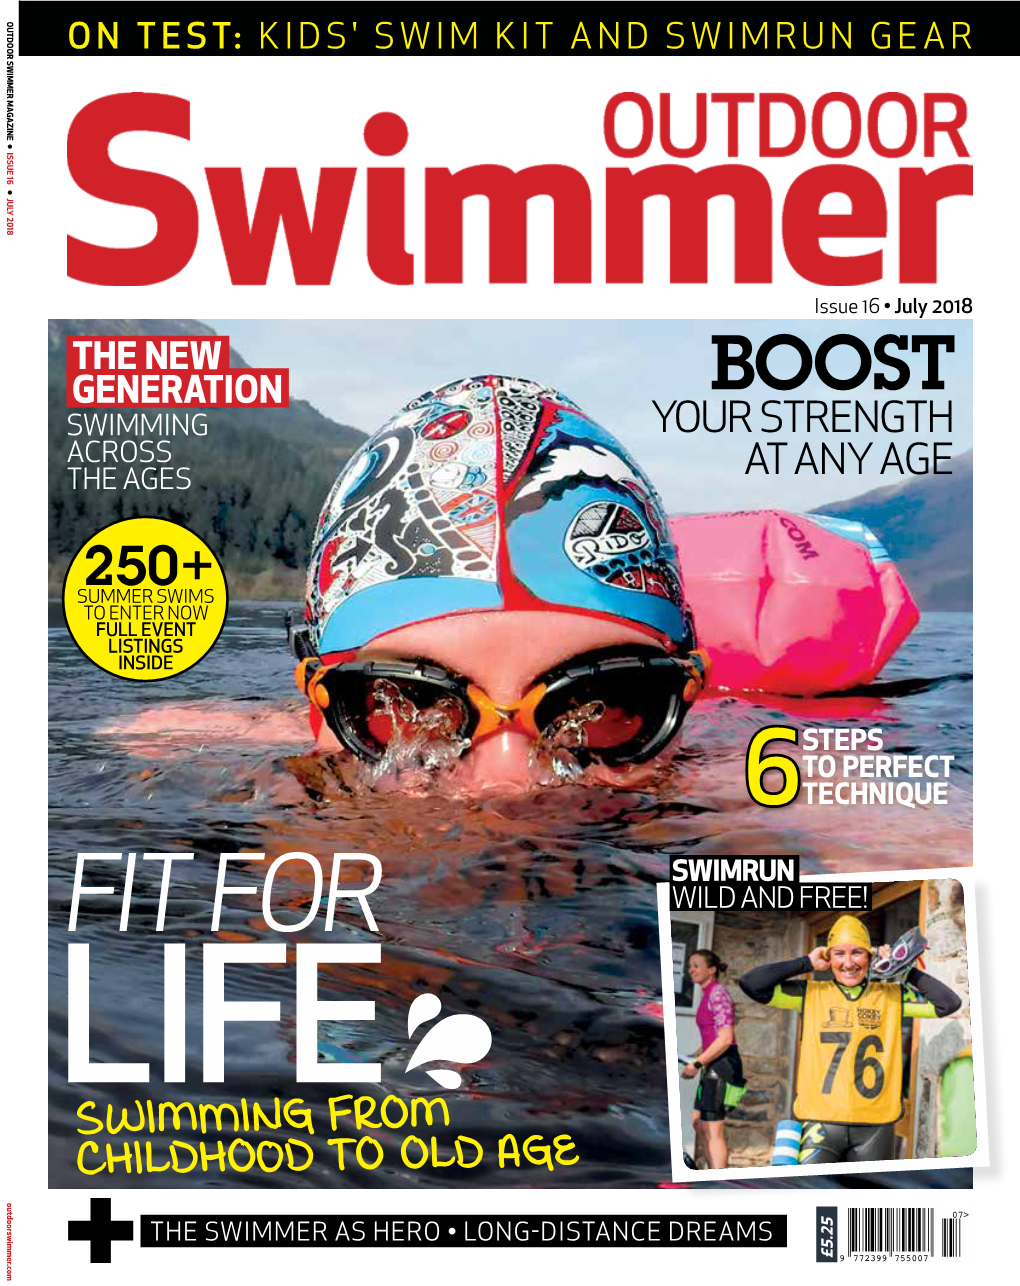 Outdoor Swimmer Magazine on Test: Kids' Swim Kit and Swimrun Gear ○ Issue 16 ○ July 2018